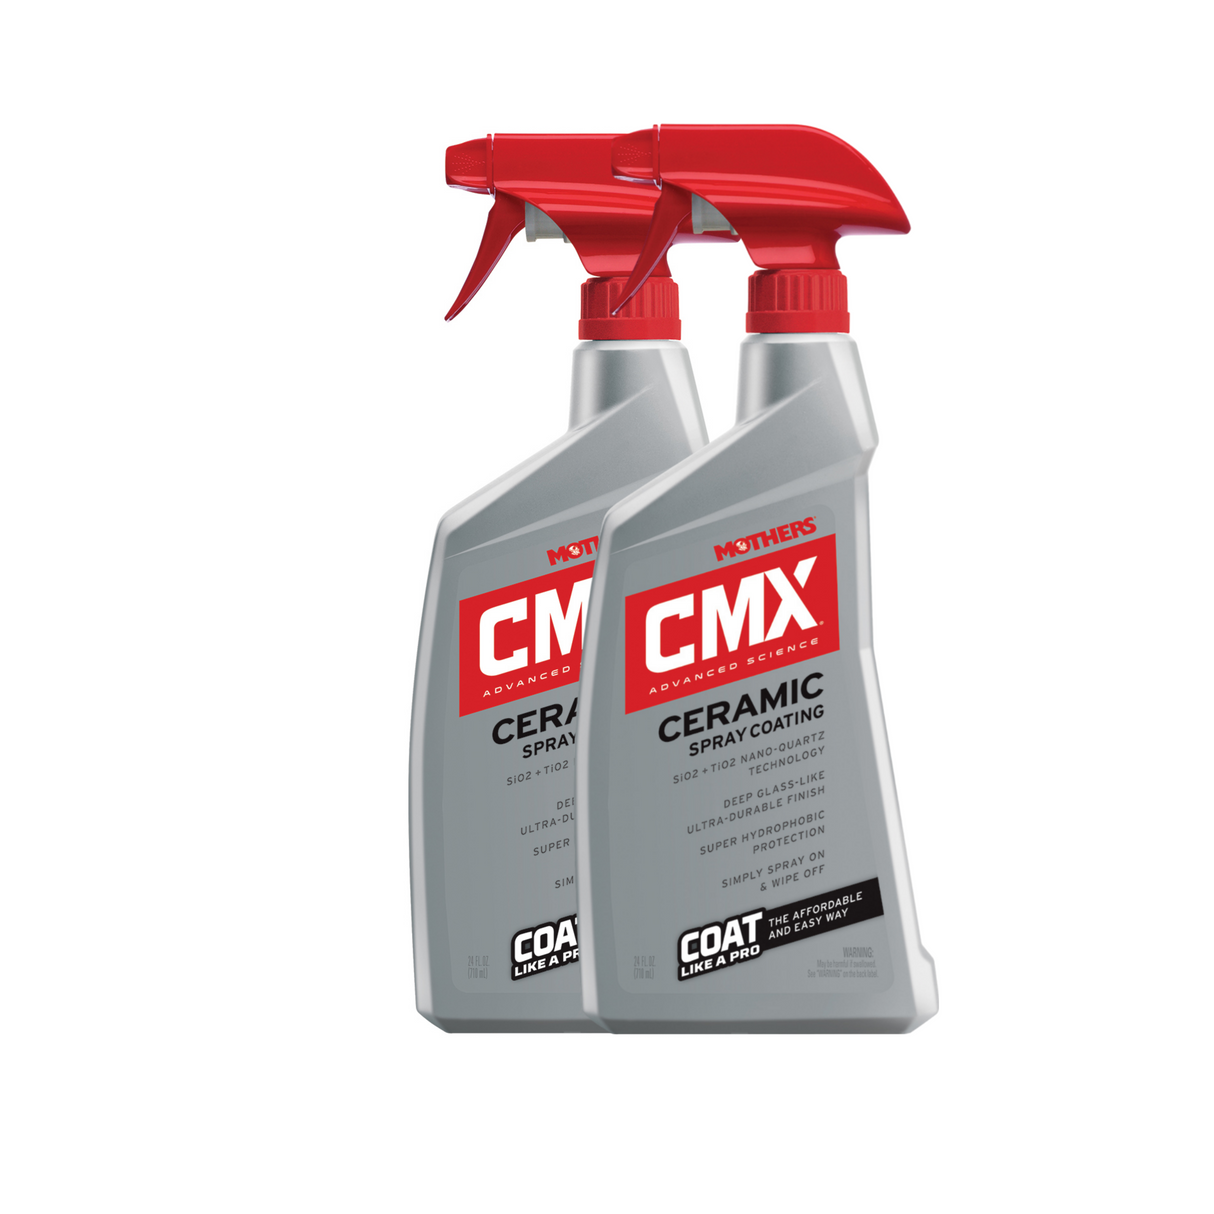 MOTHERS 01024 CMX Ceramic Spray Coating  2 PACK - Ultra-Durable - Hydrophobic - Wax - 24 oz.